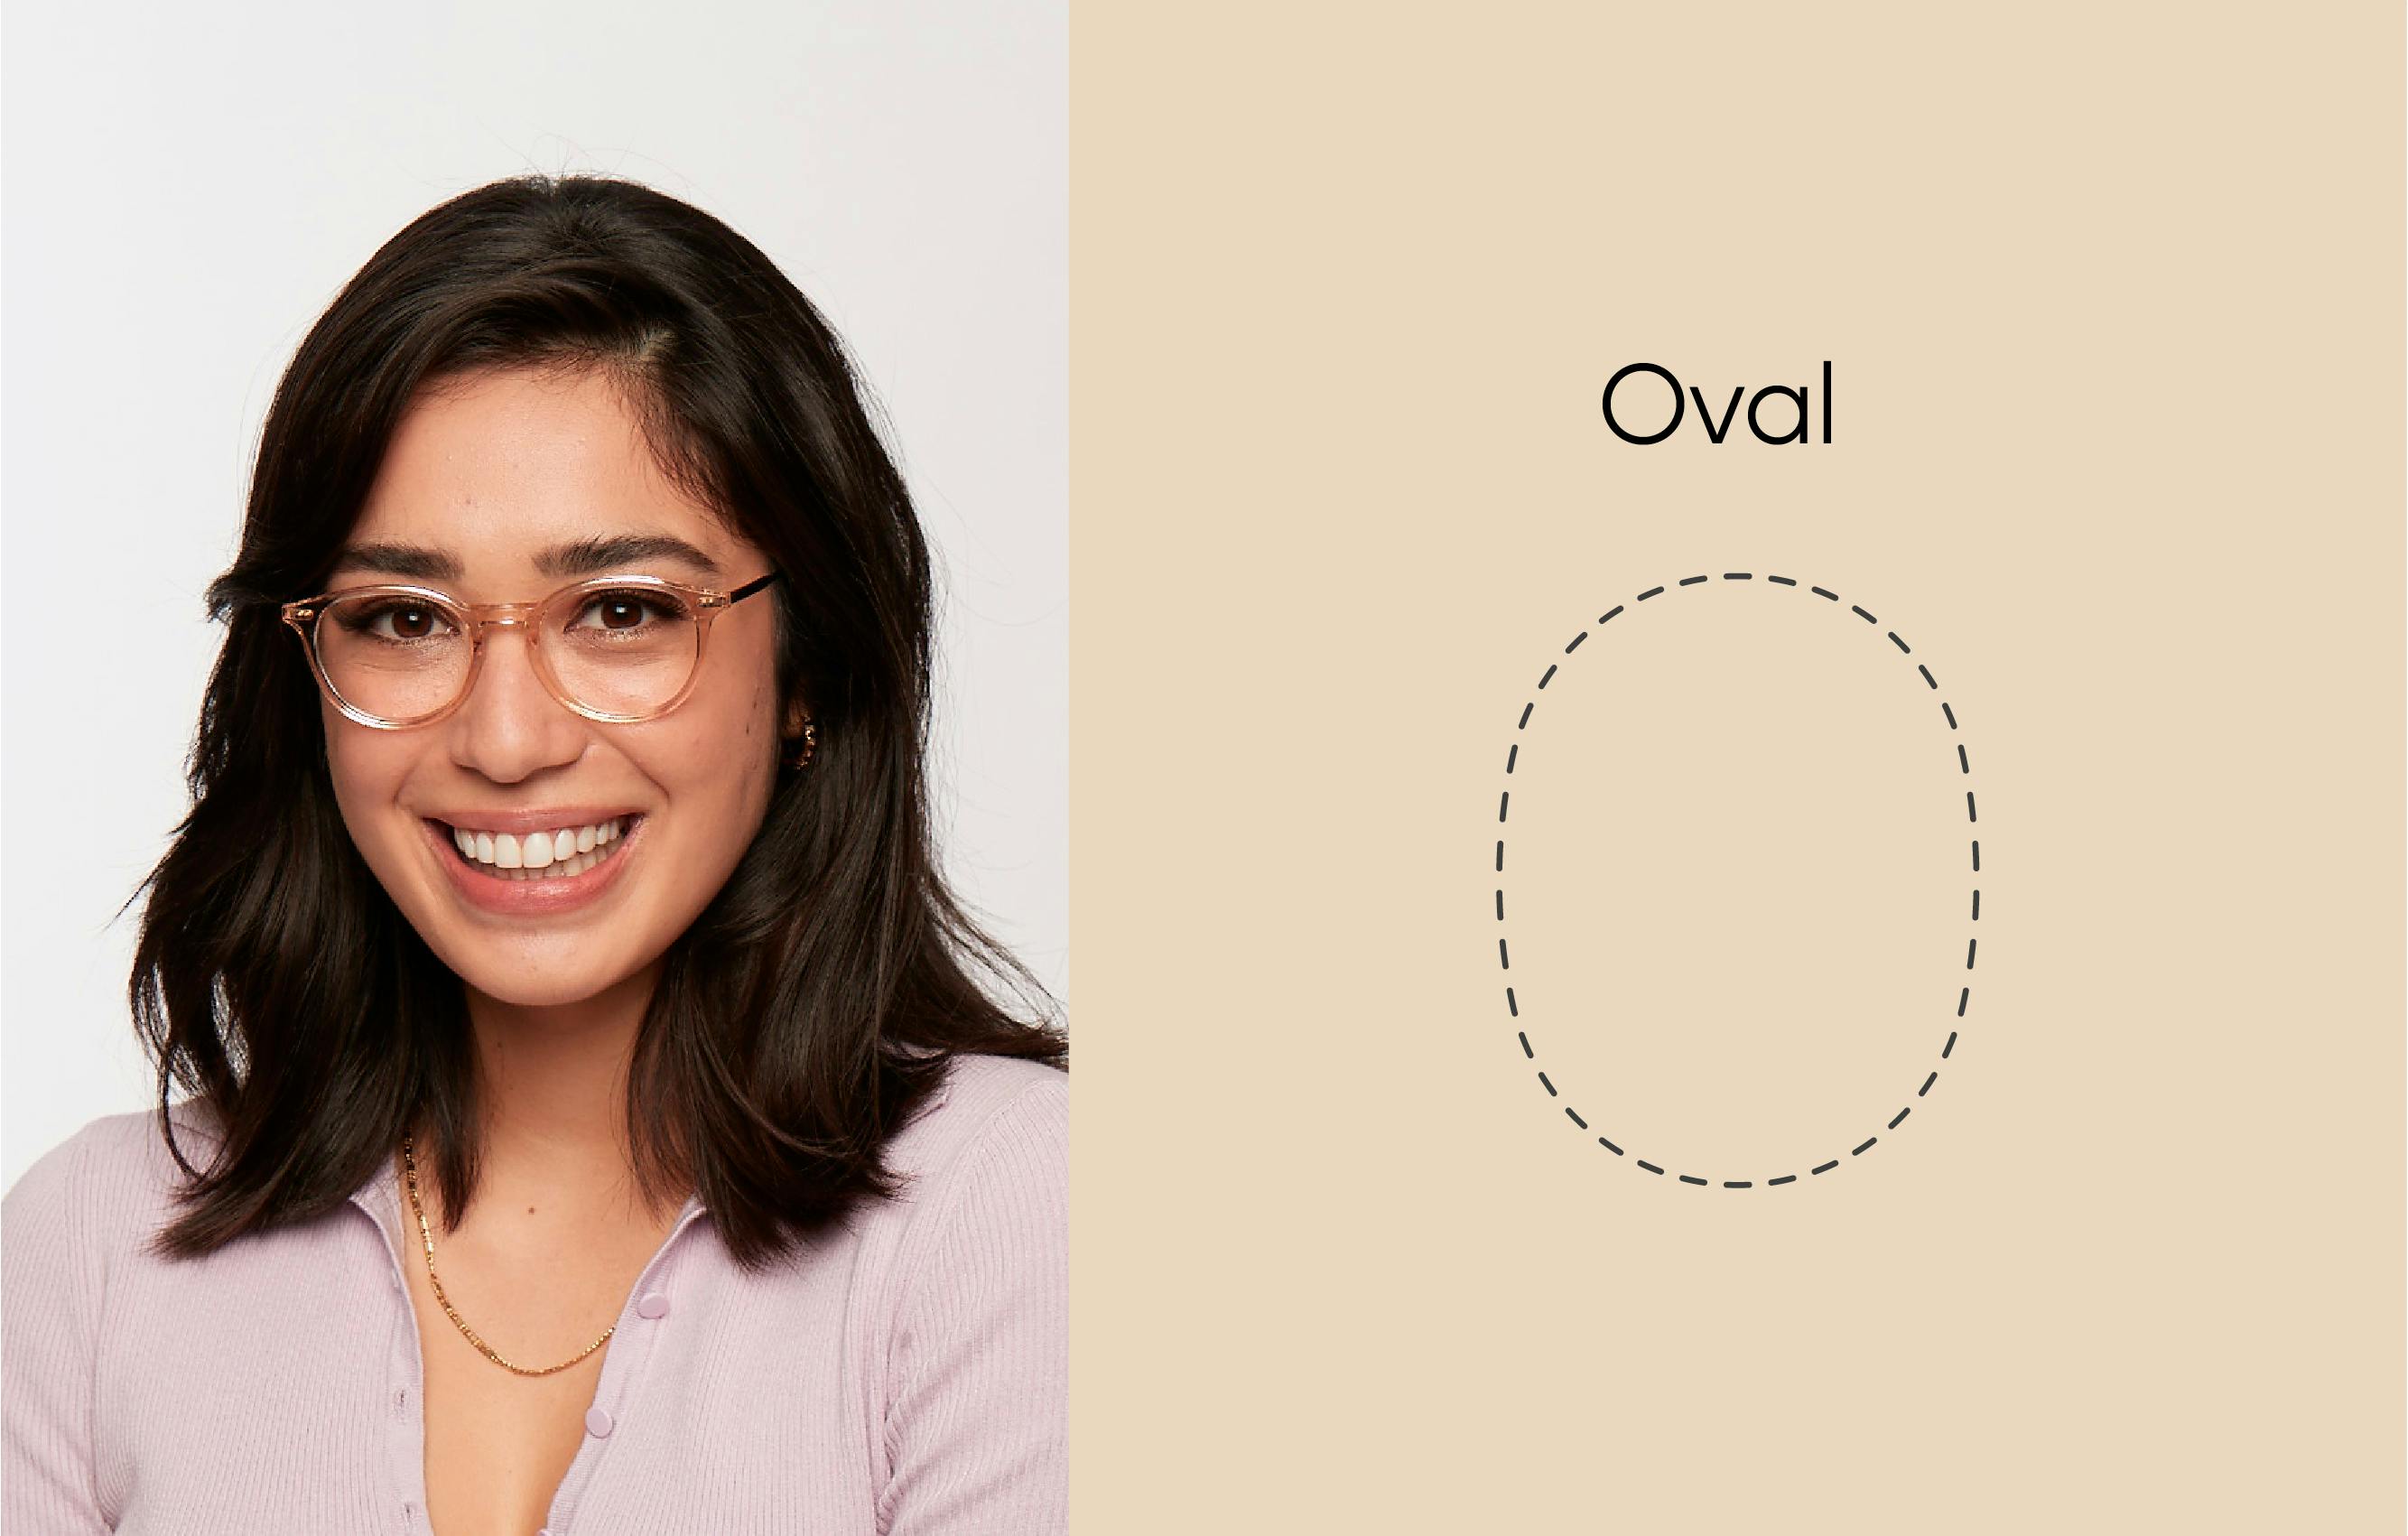 Oval glasses shape